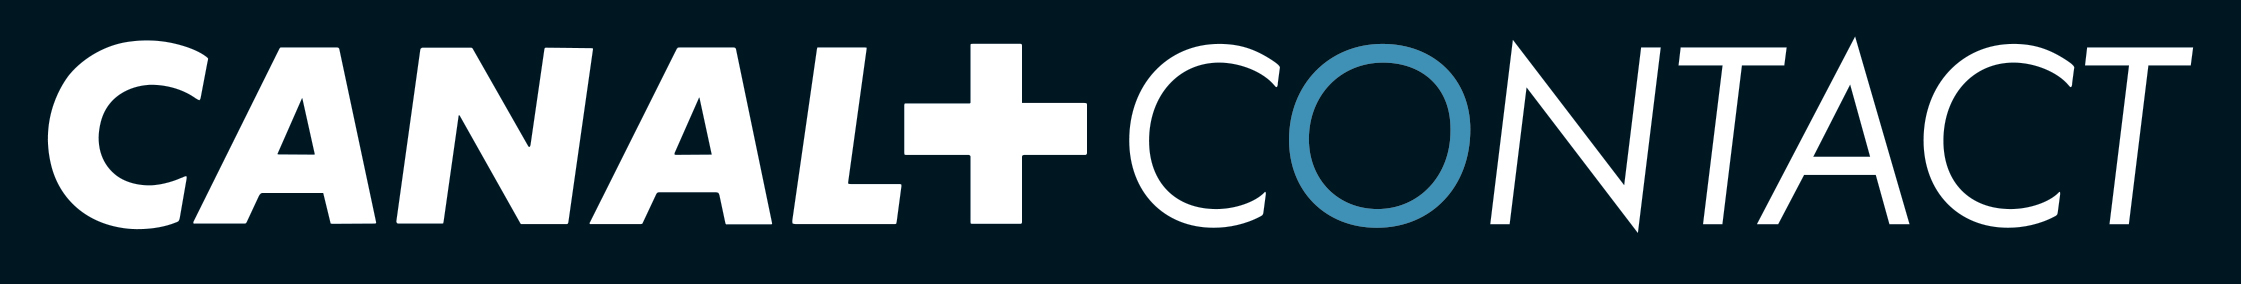 canalplus contact logo